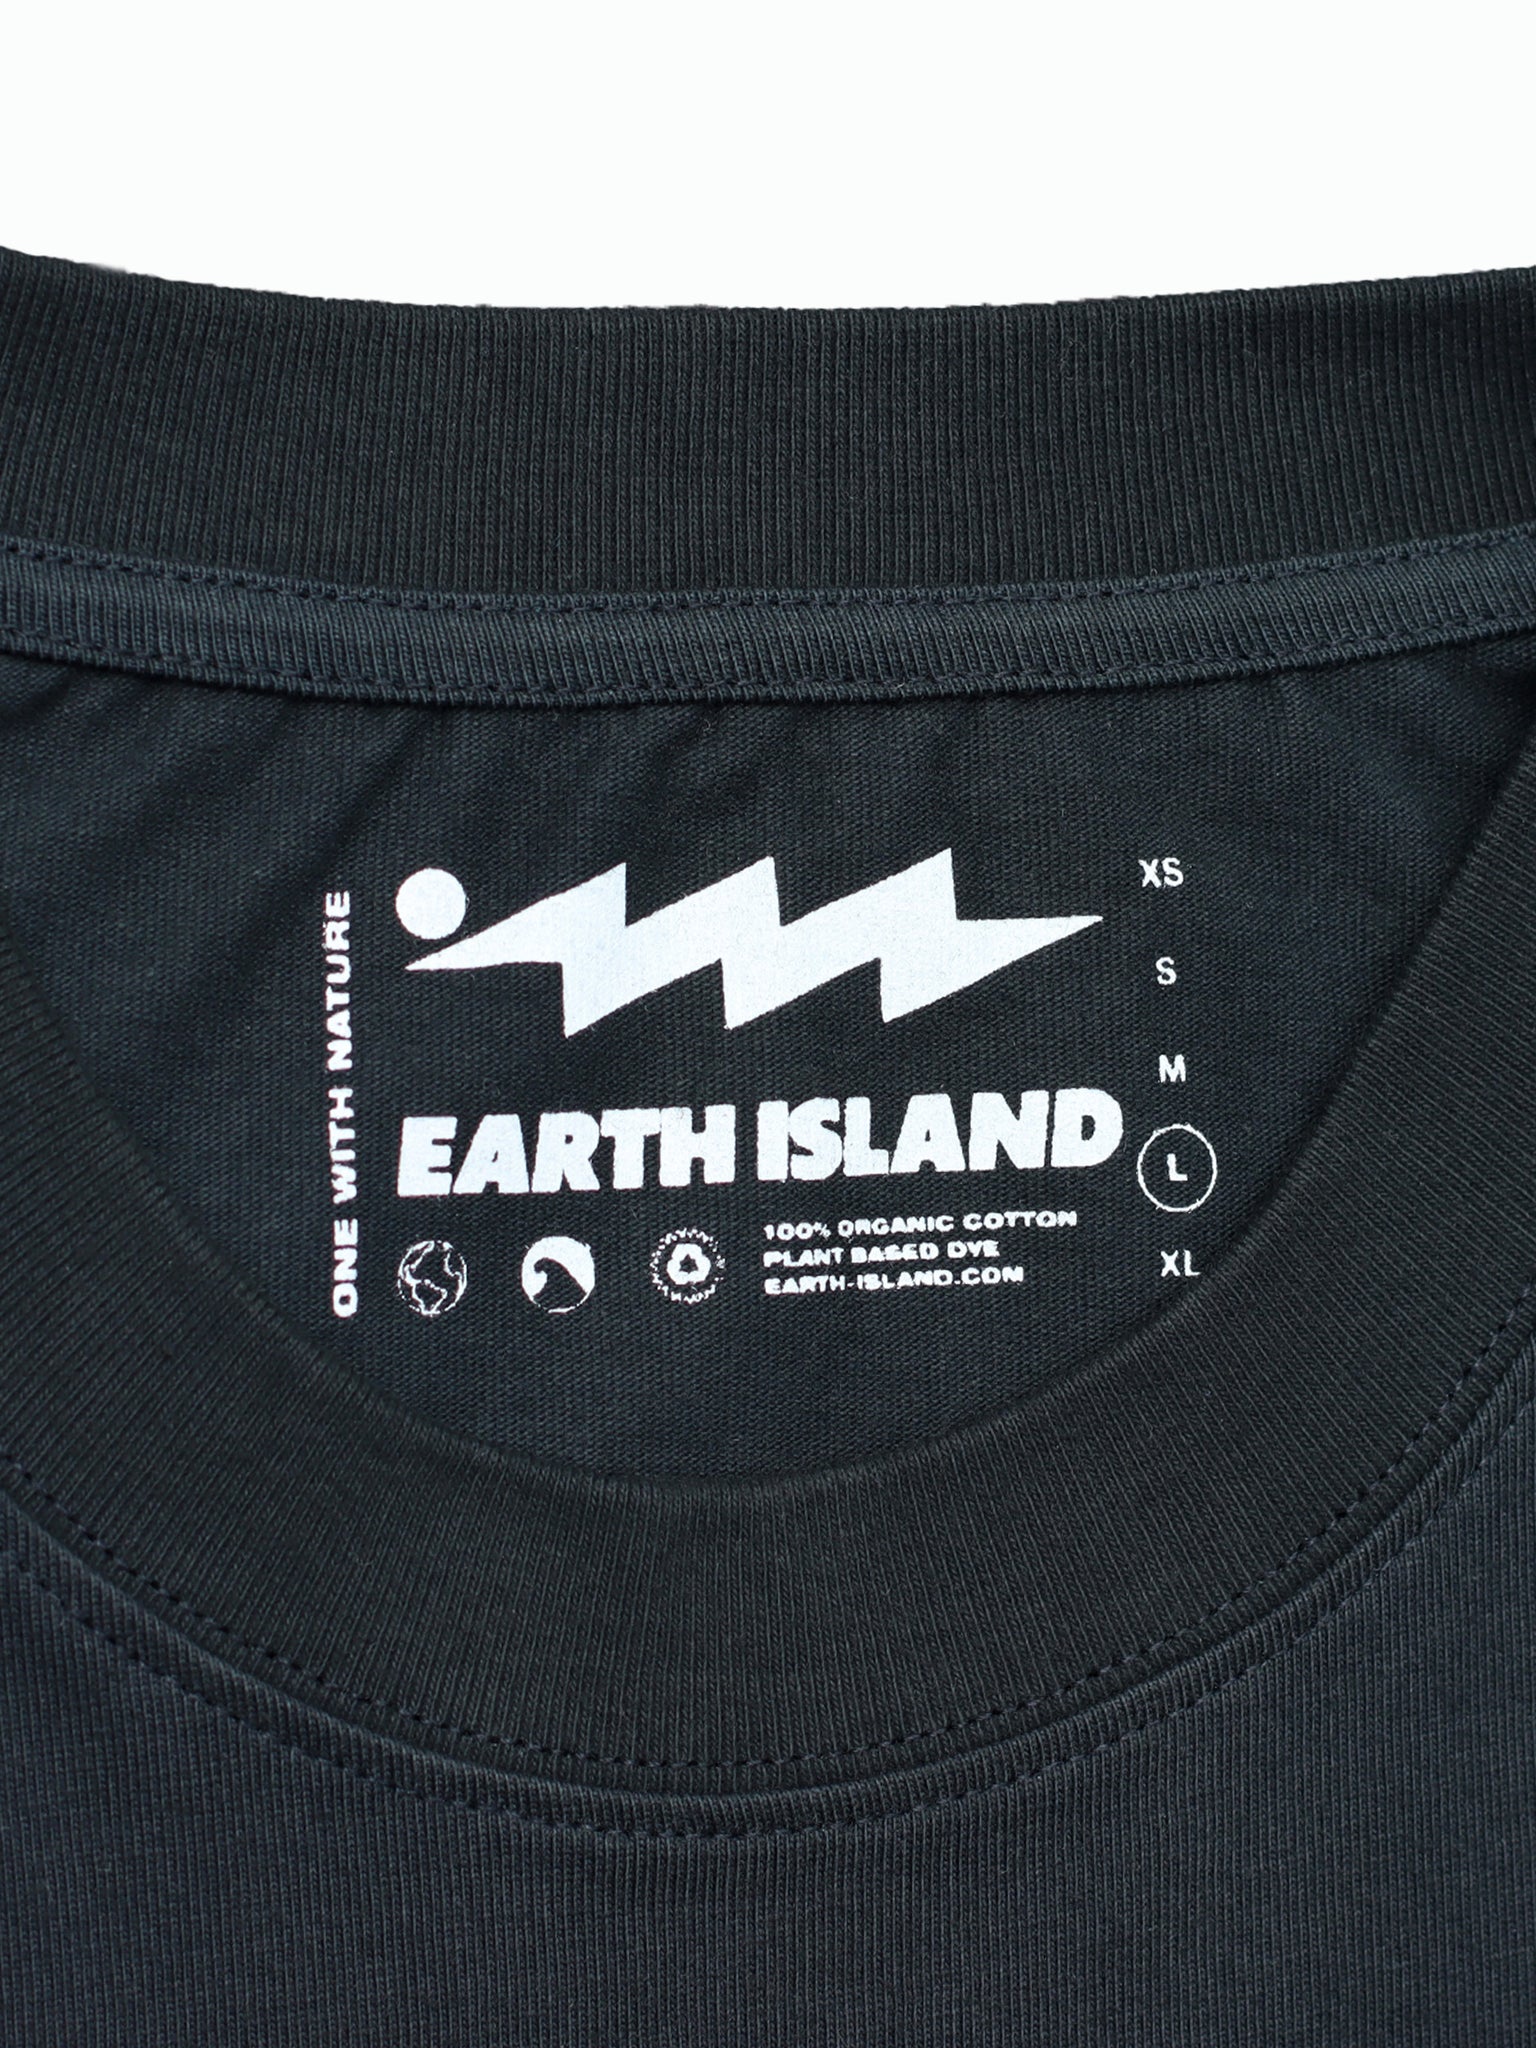 EARTH ISLAND BLACK LOGO - SHORT SLEEVE